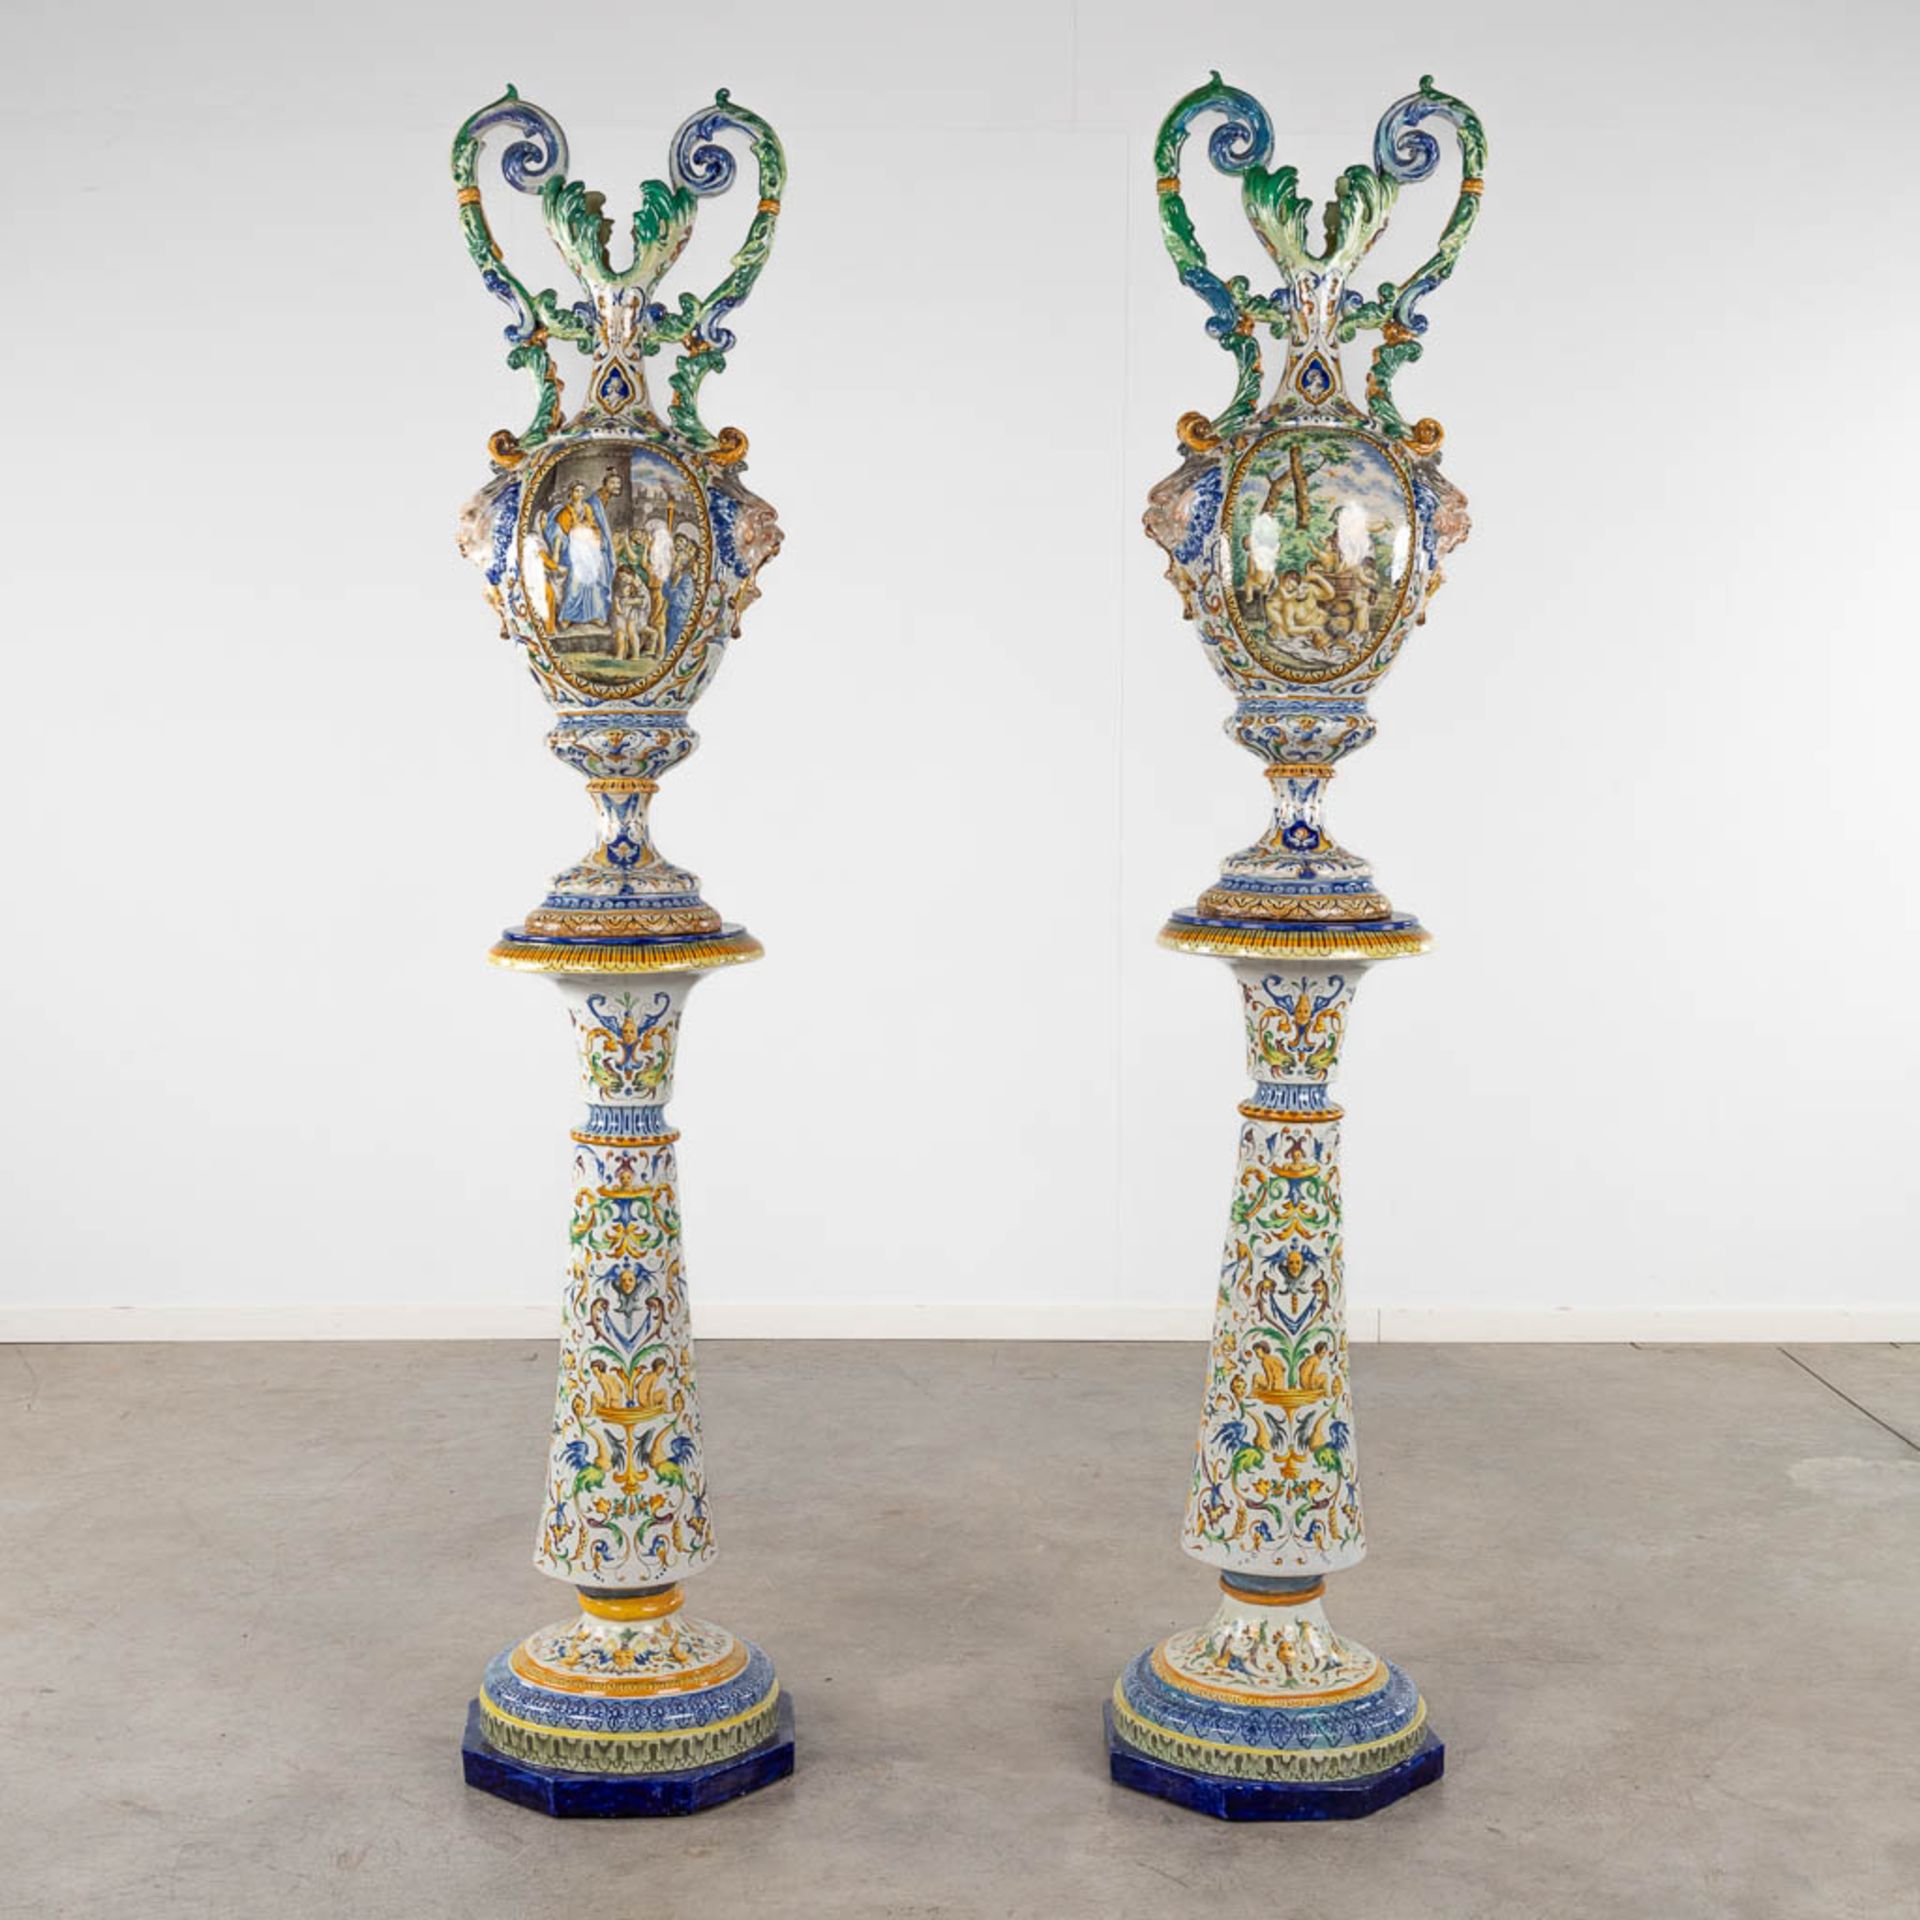 A pair of large vases, Italian Renaissance style, glazed faience. 20th C. (D:45 x W:45 x H:205 cm)